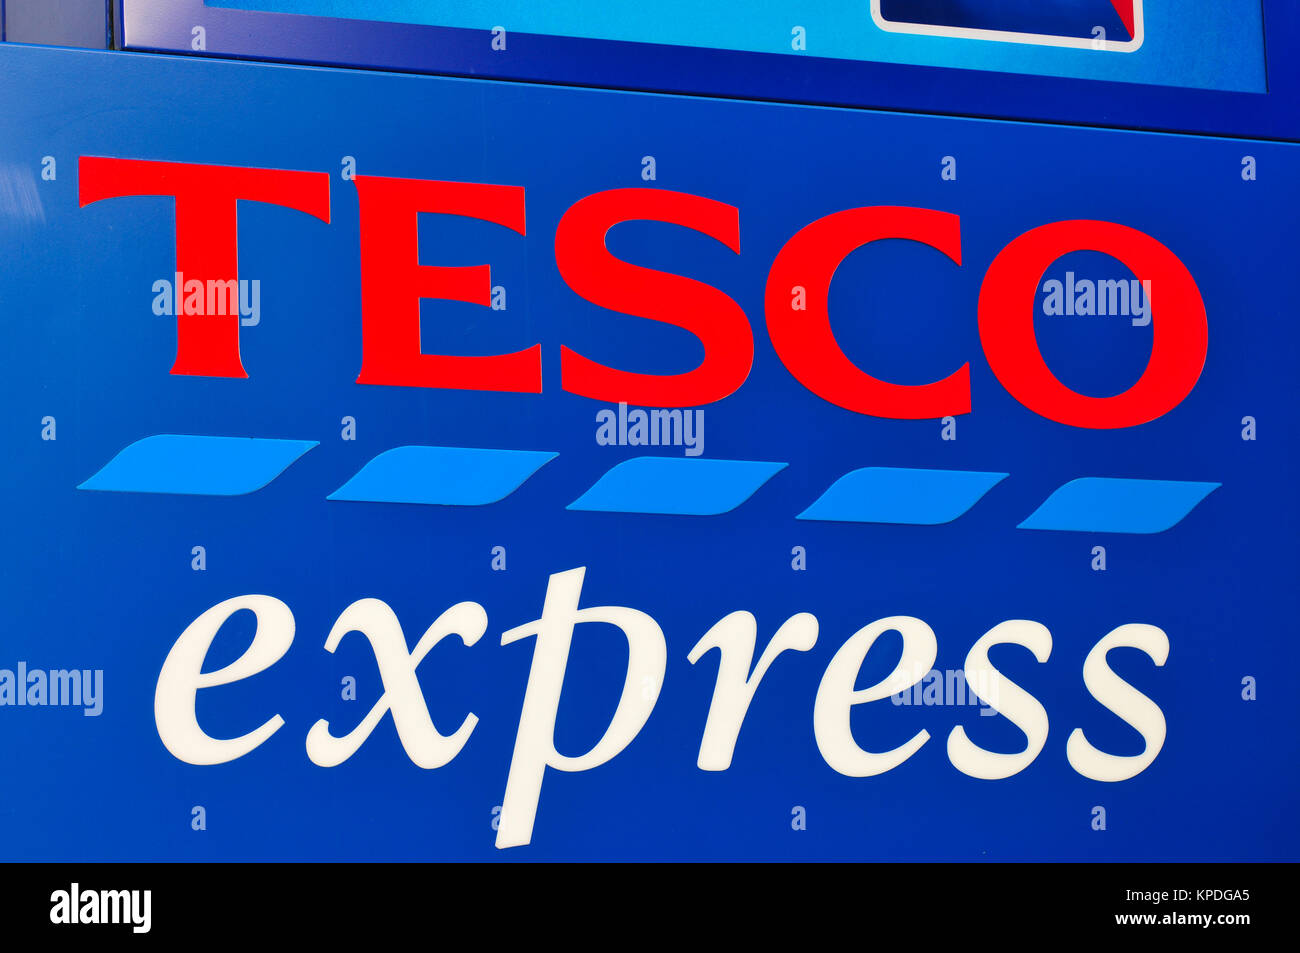 Tesco Express brand and logo Stock Photo